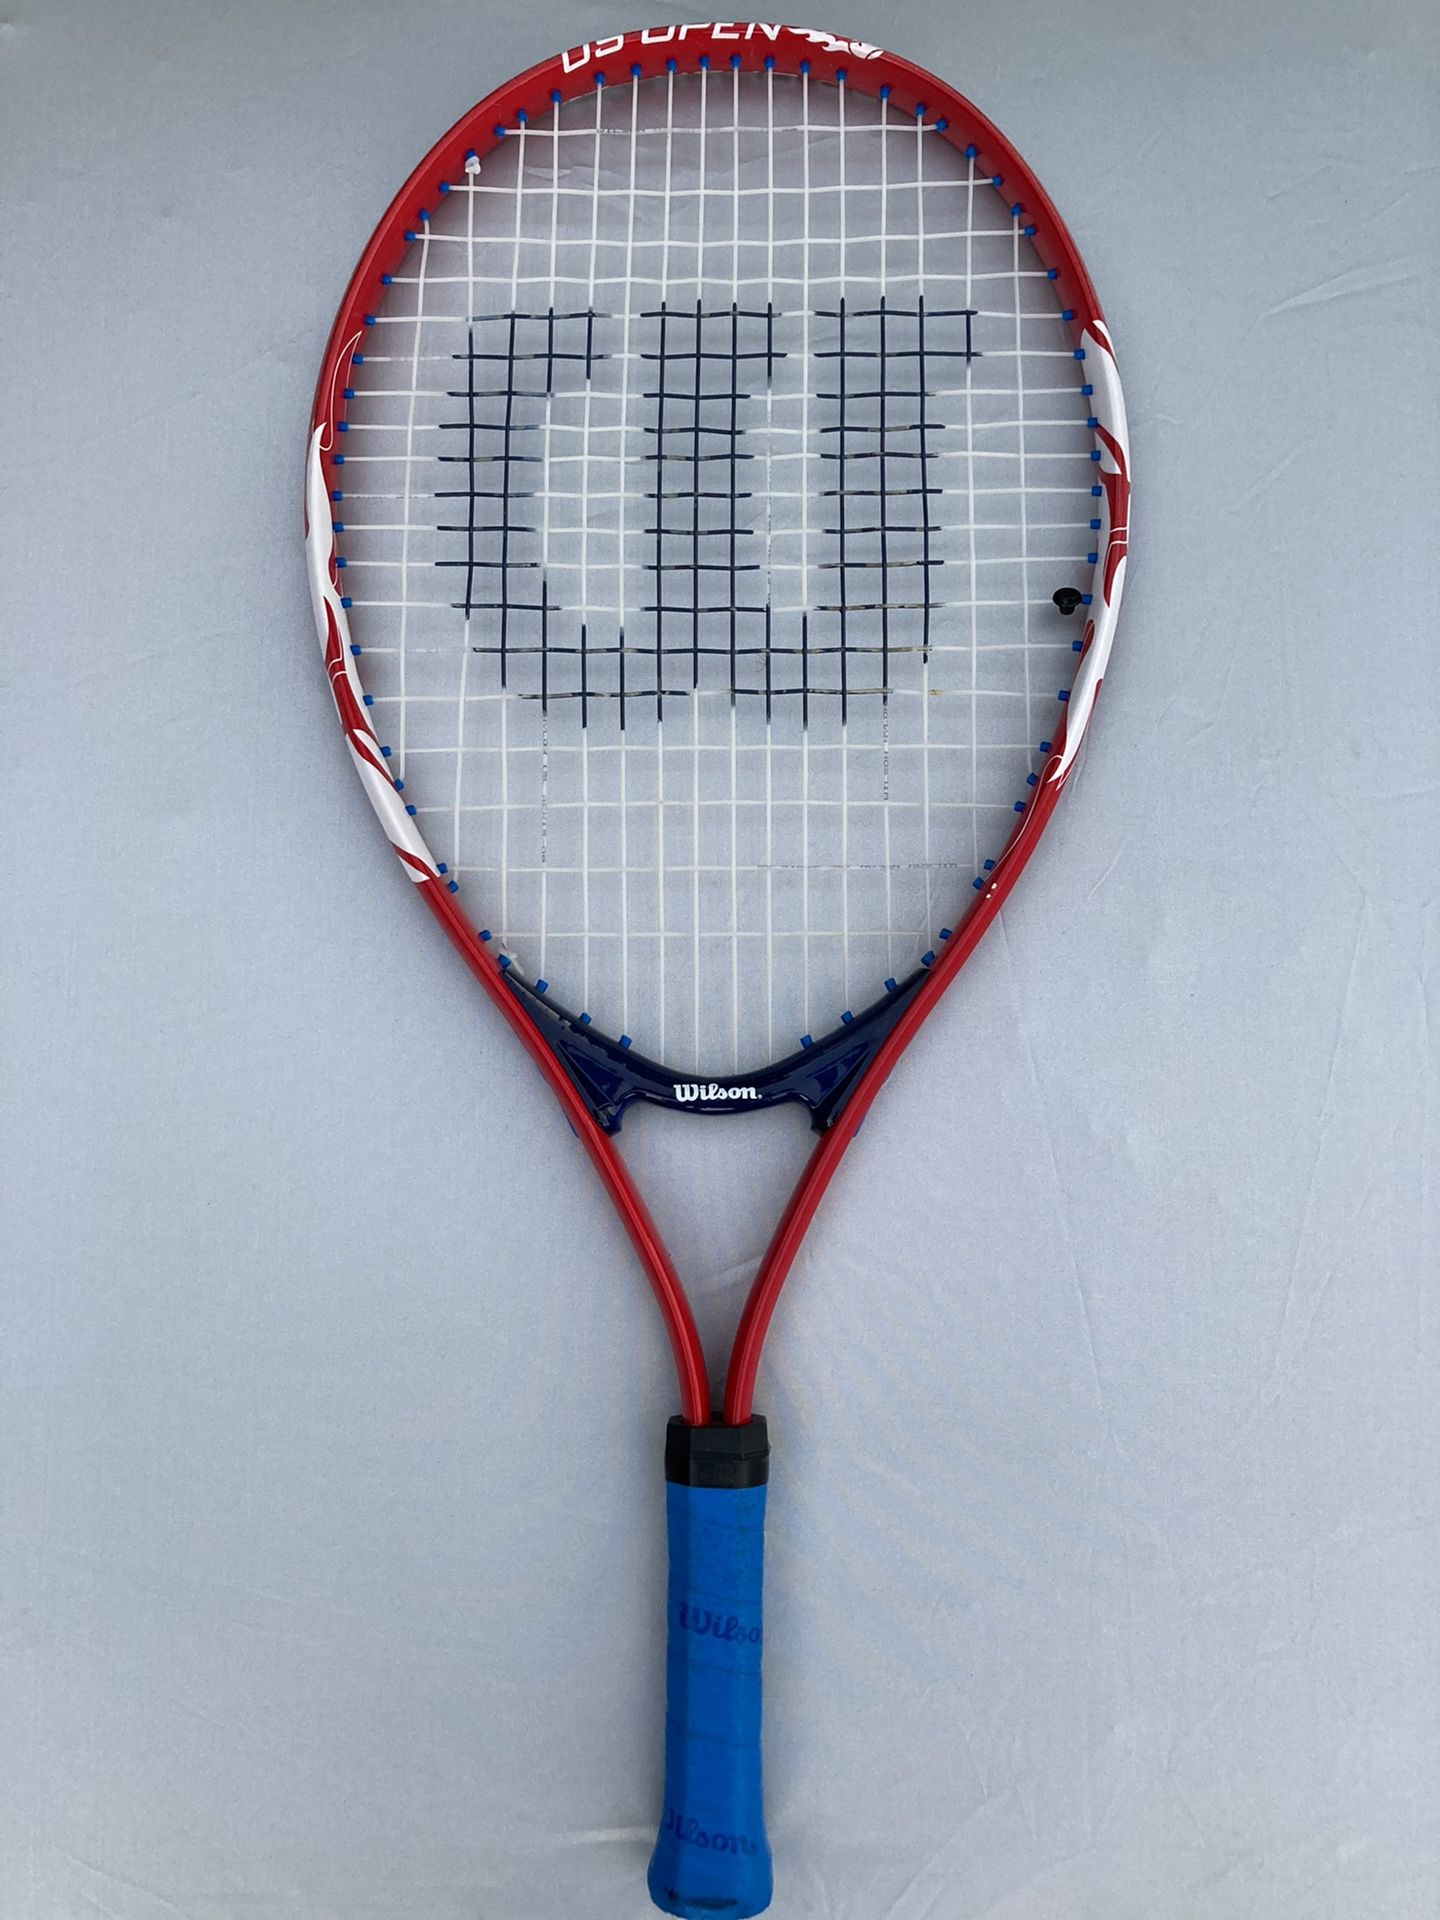 Little kids tennis racket / Wilson